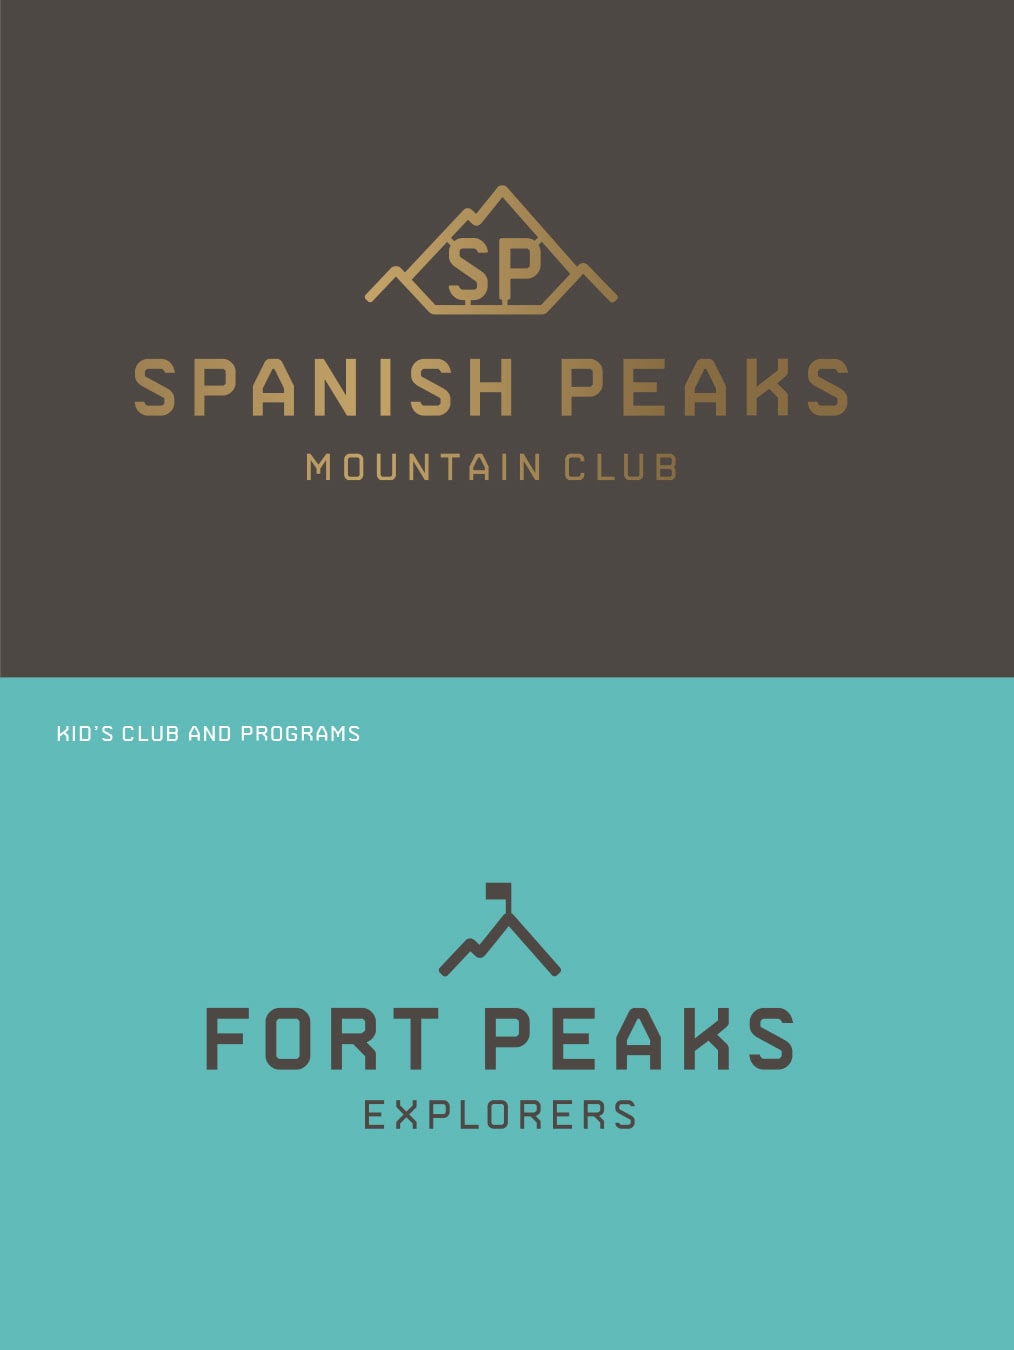 Spanish Peaks Mountain Club logos